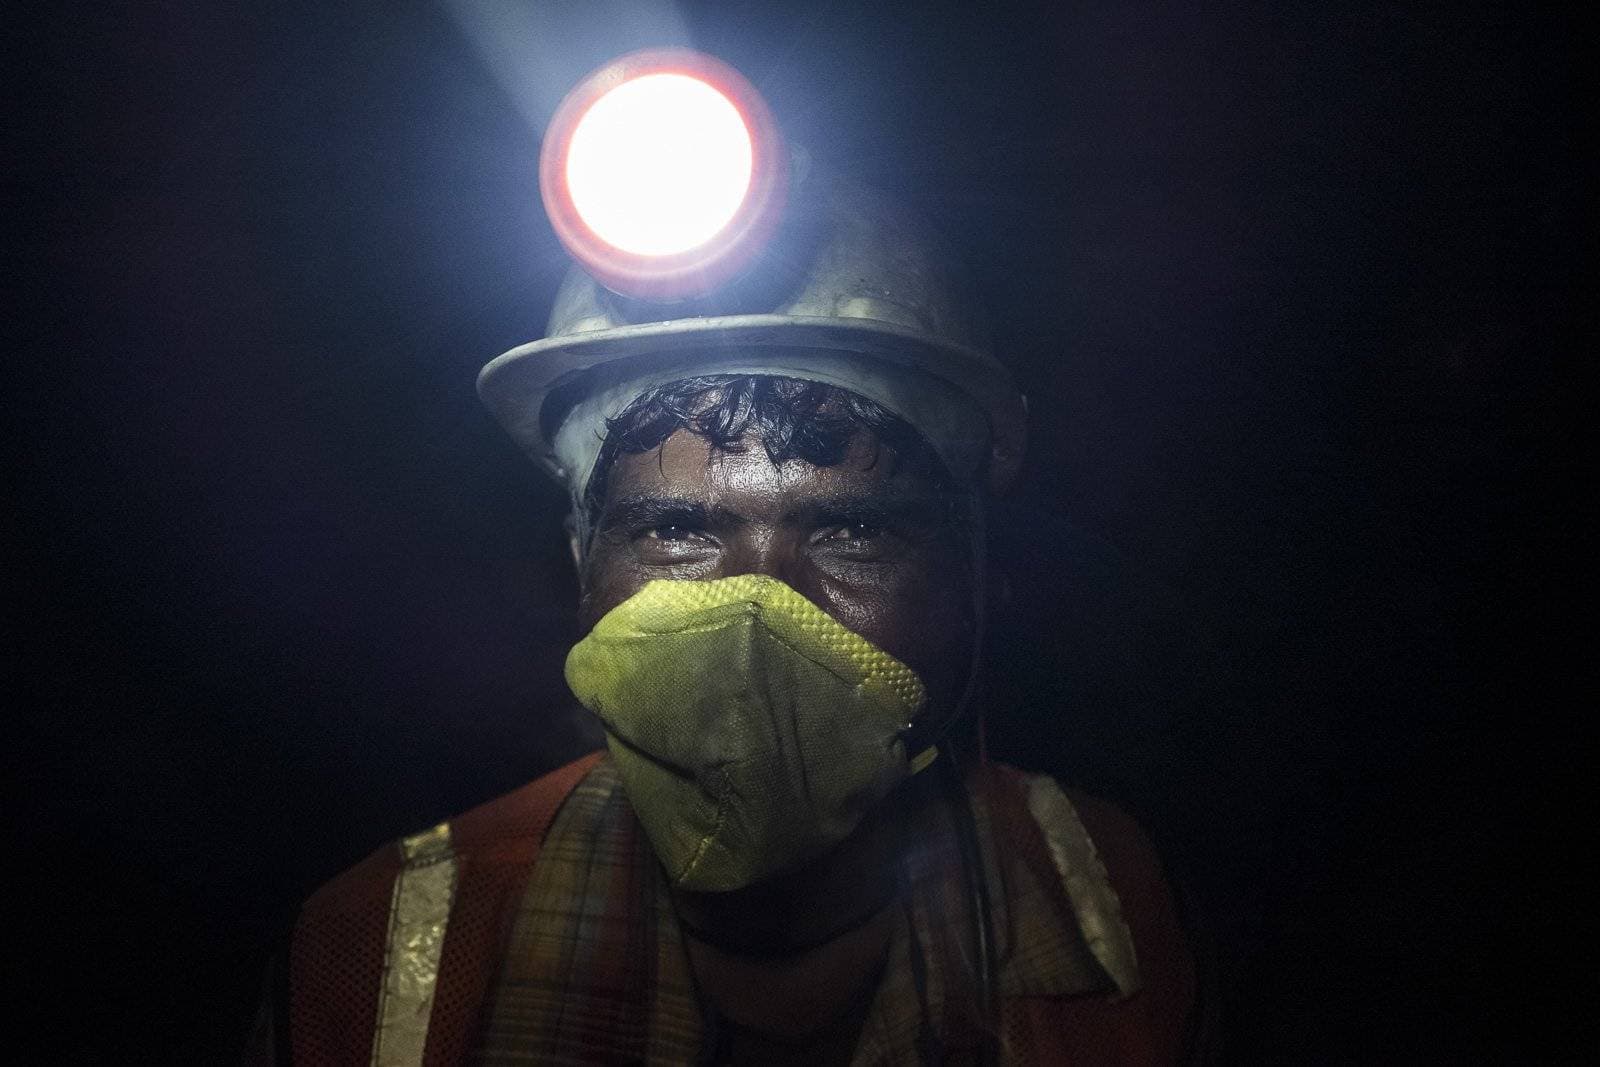 Mining in India